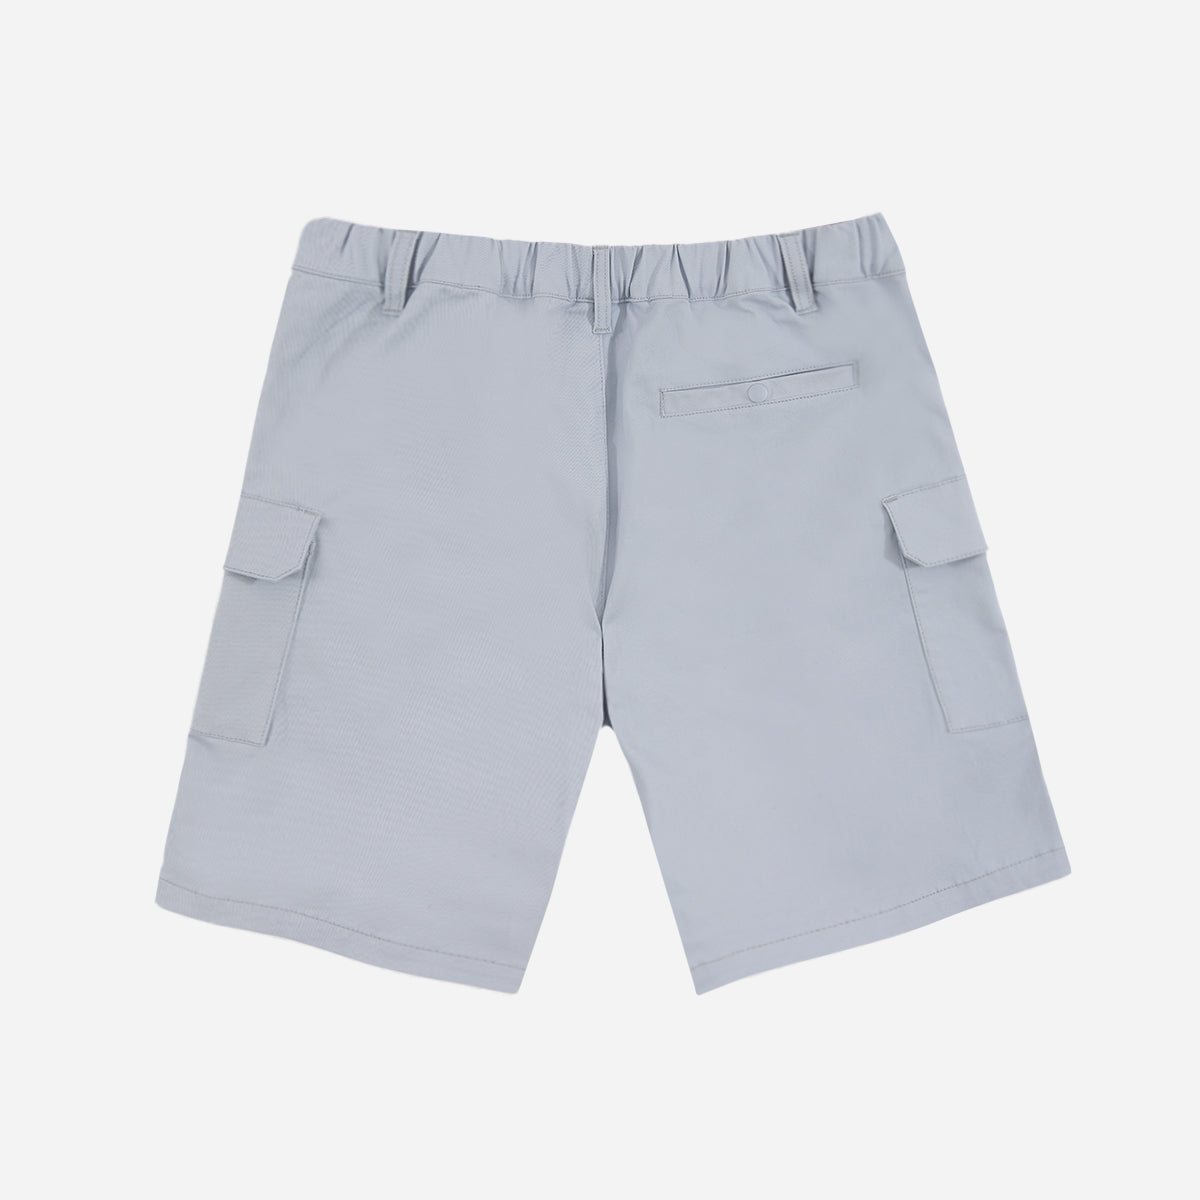 [Clearance] Sic Cargo Shorts